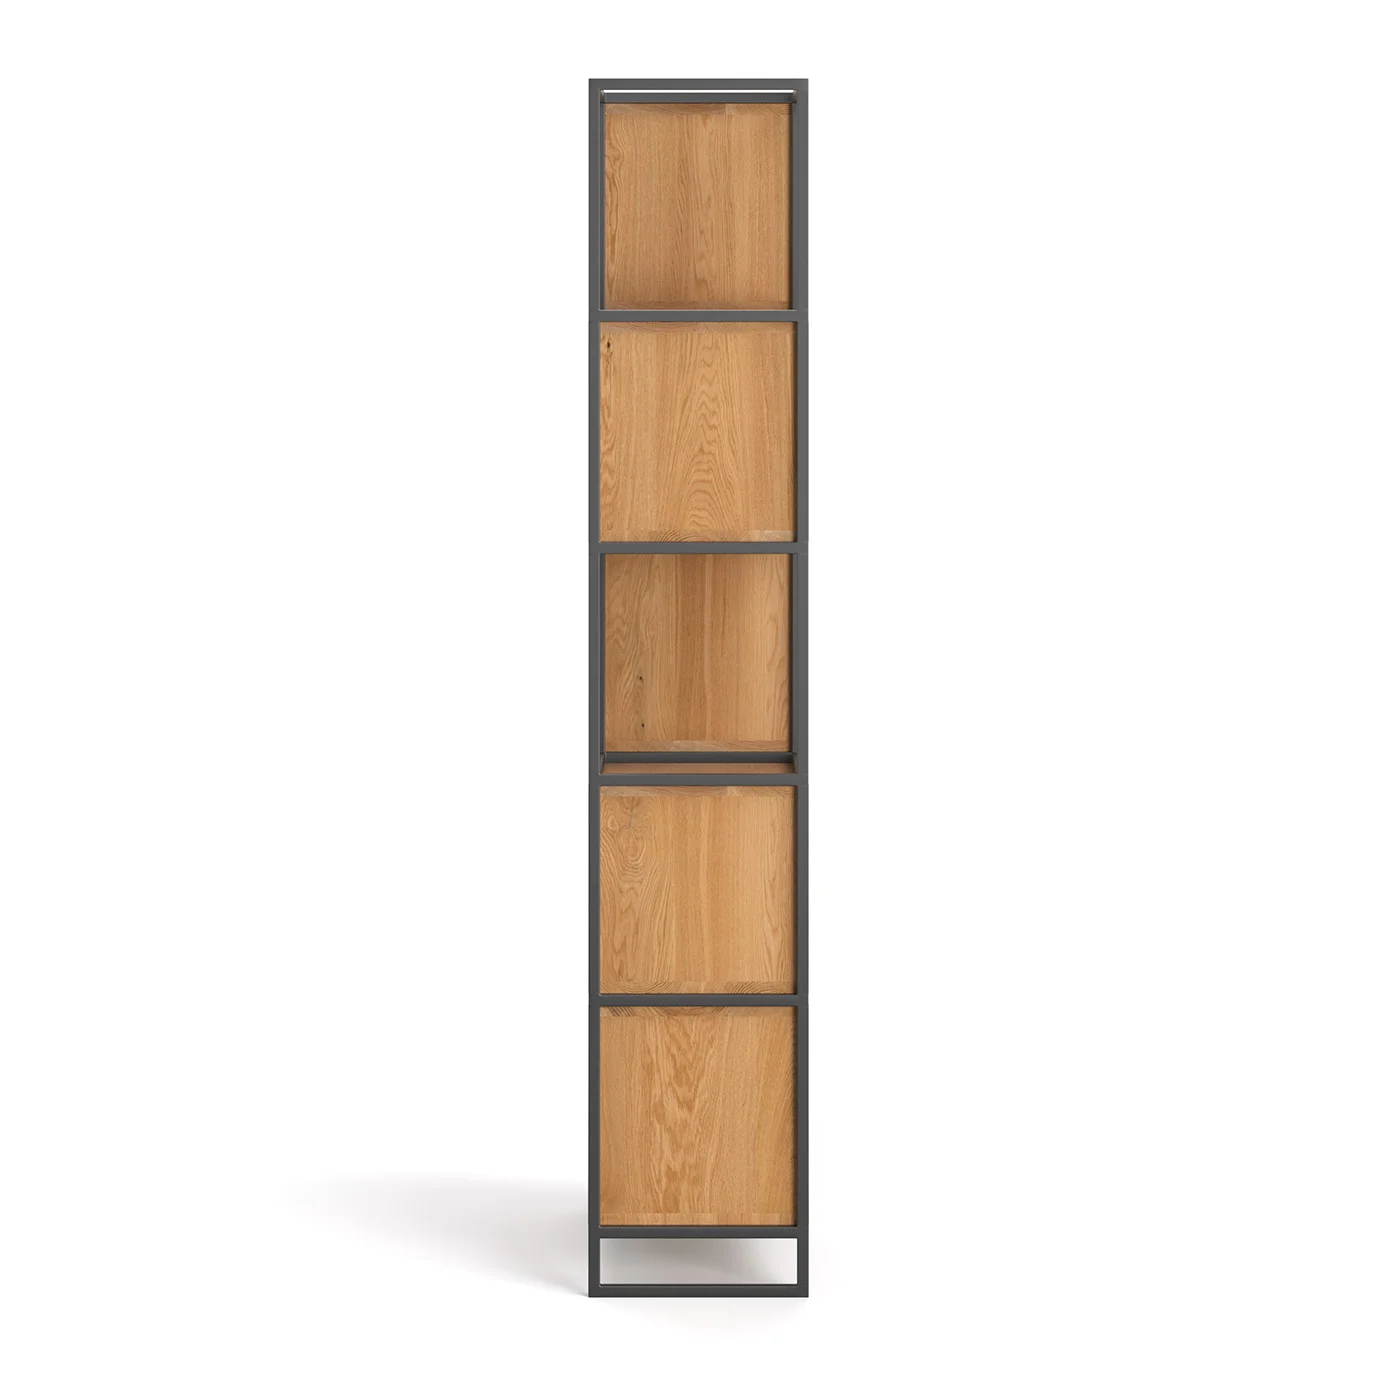 Frame-Bücherregal aus massivem Holz